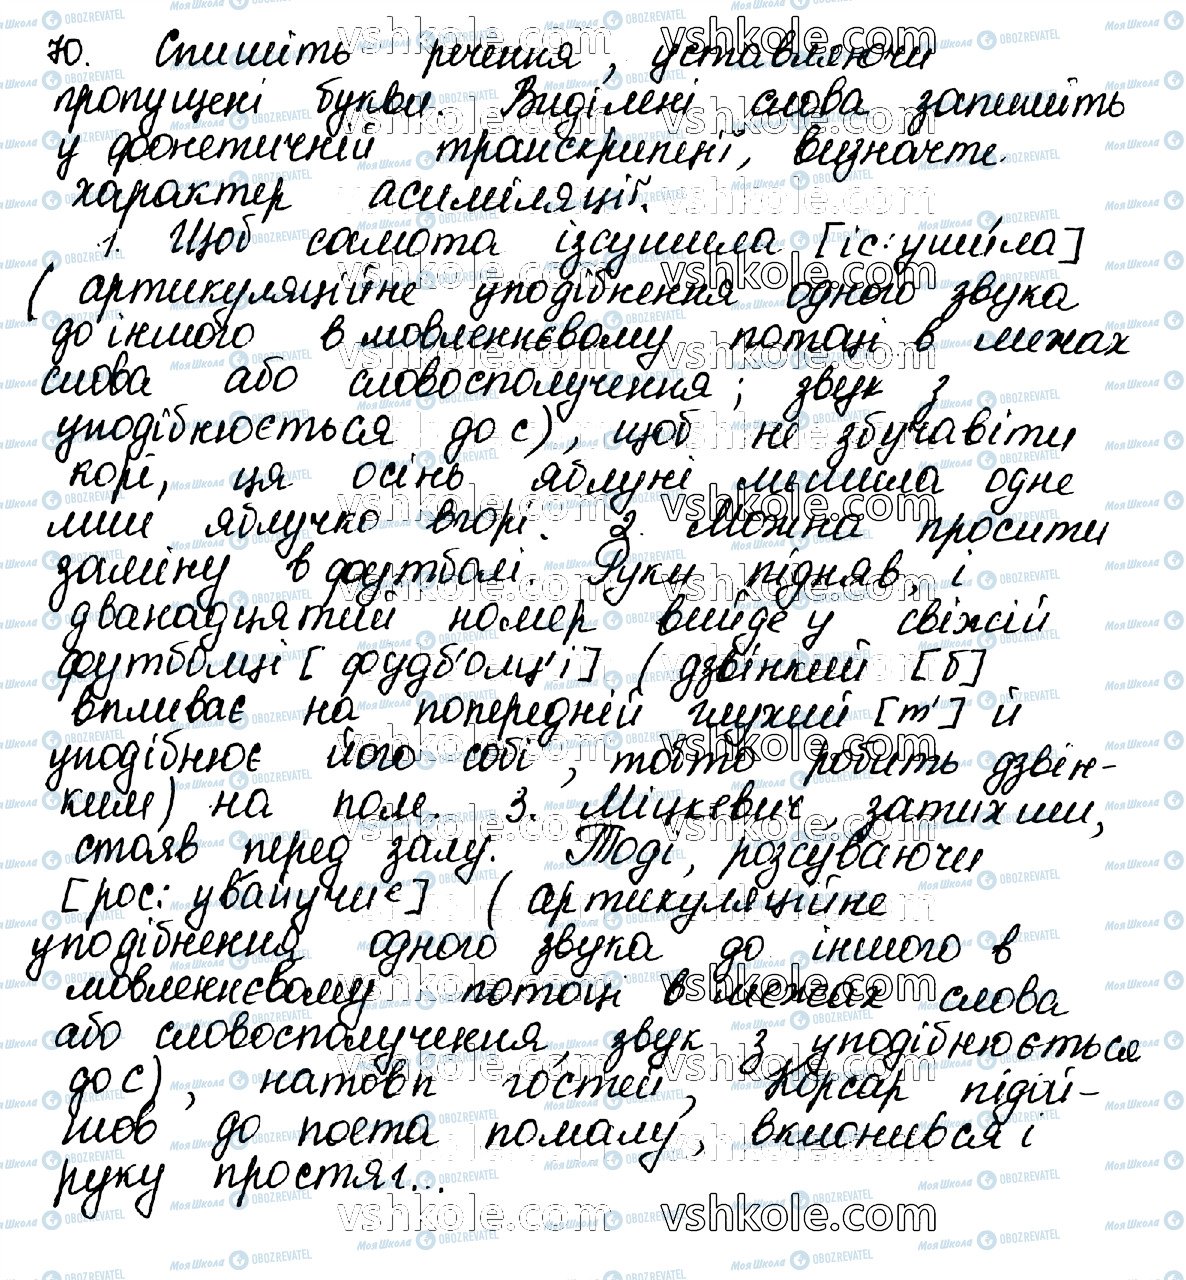 ГДЗ Укр мова 10 класс страница 70